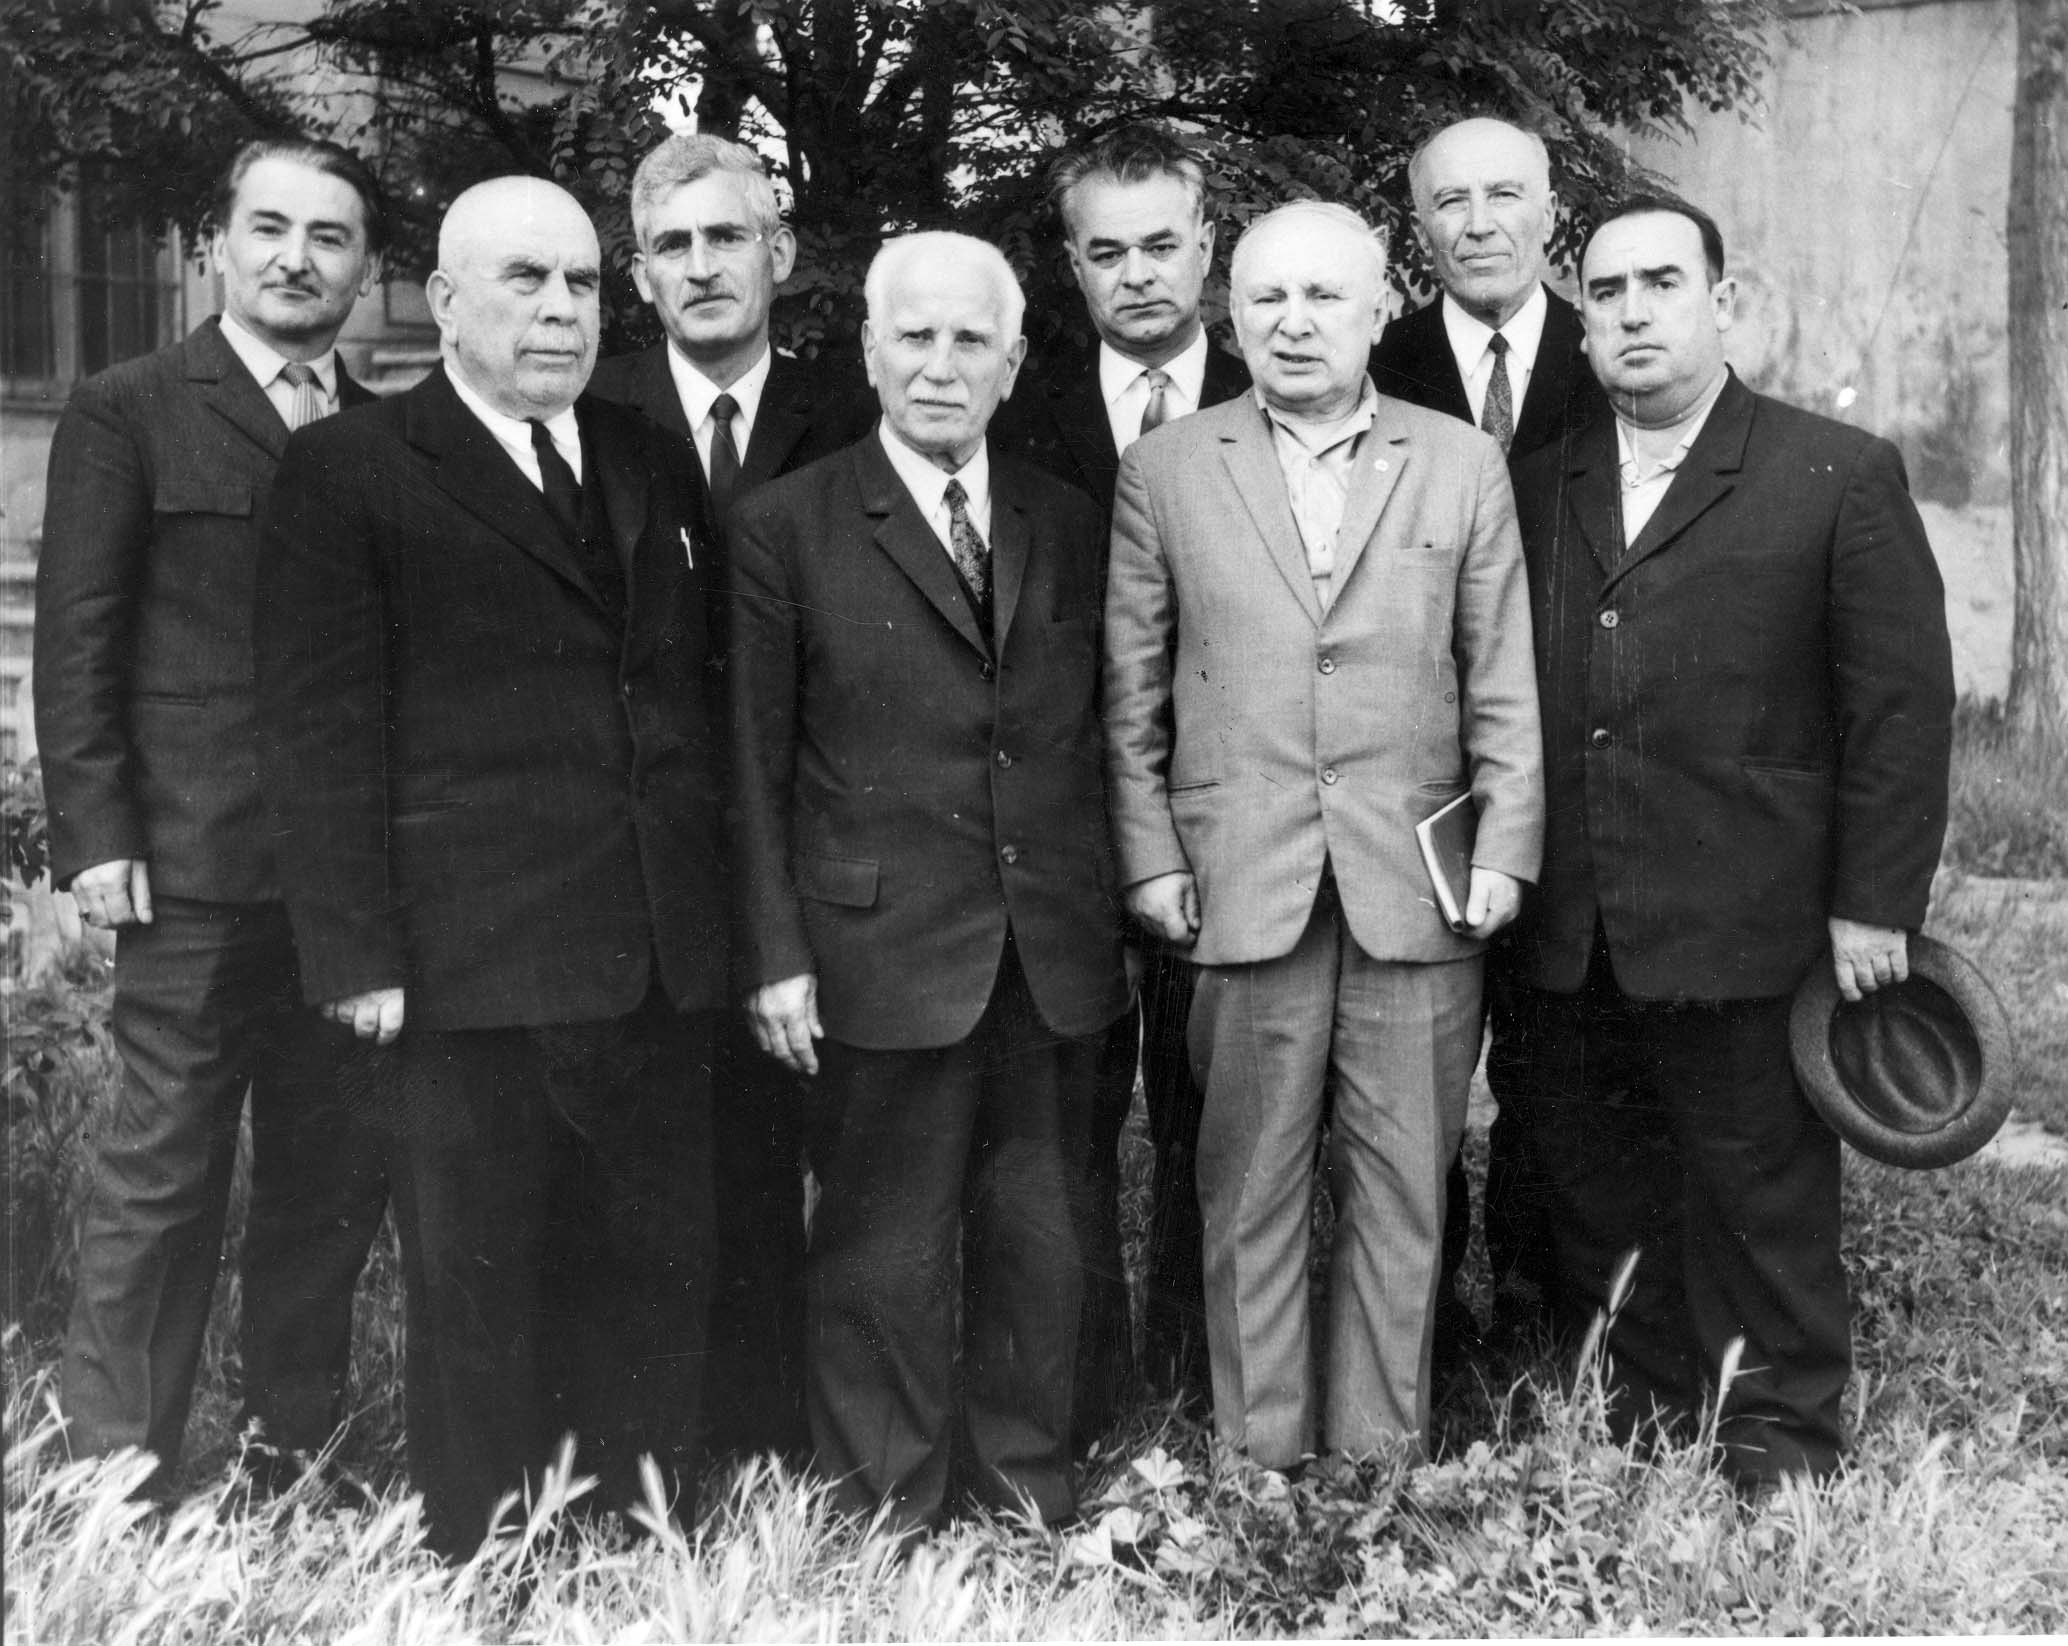 Май 1970 г., координационное совещание кавказоведов. Слева направо: С.М.Хайдаков, М.-С. Дж.Саидов, Т.Е.Гудава, А.С.Чикобава, А.А.Магометов, Е.А.Бокарев, Г.Б. Муркелинский, Р.И.Гайдаров